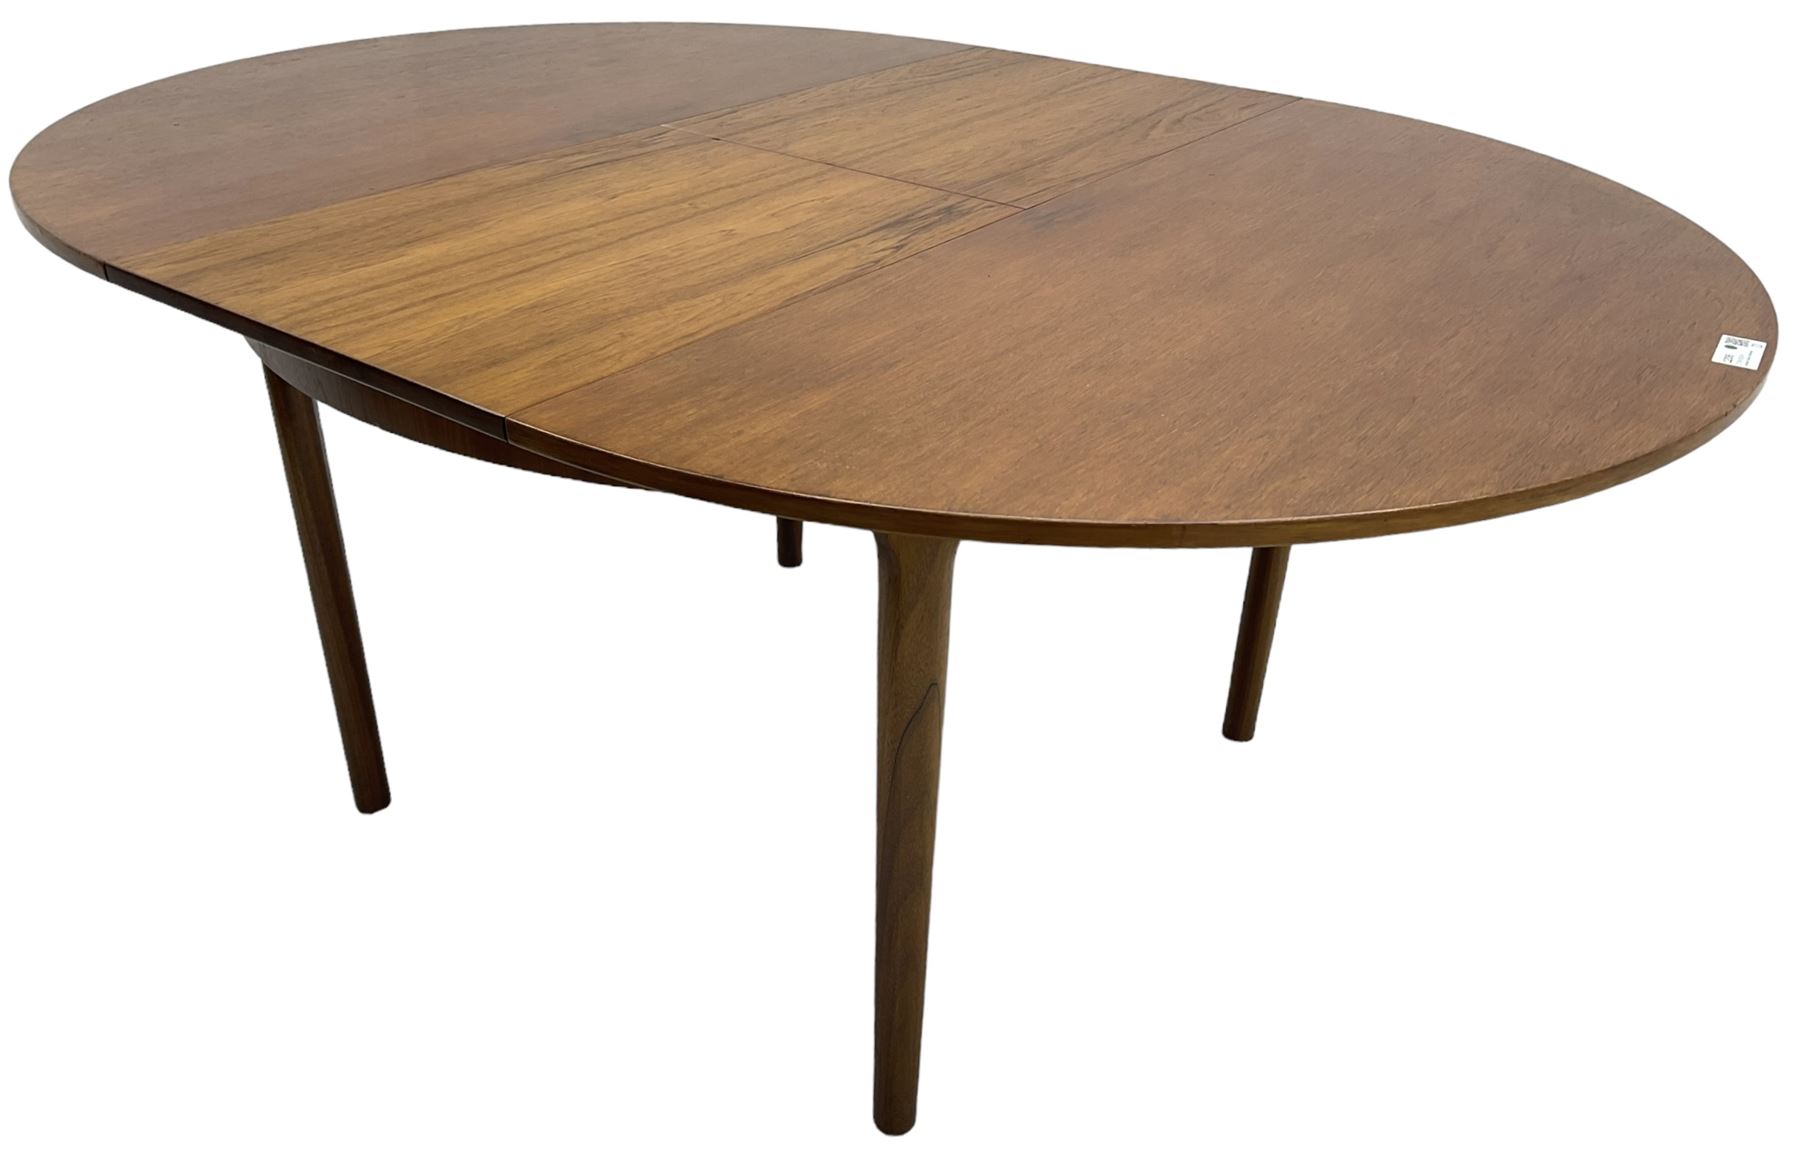 McIntosh - mid-20th century teak extending dining table